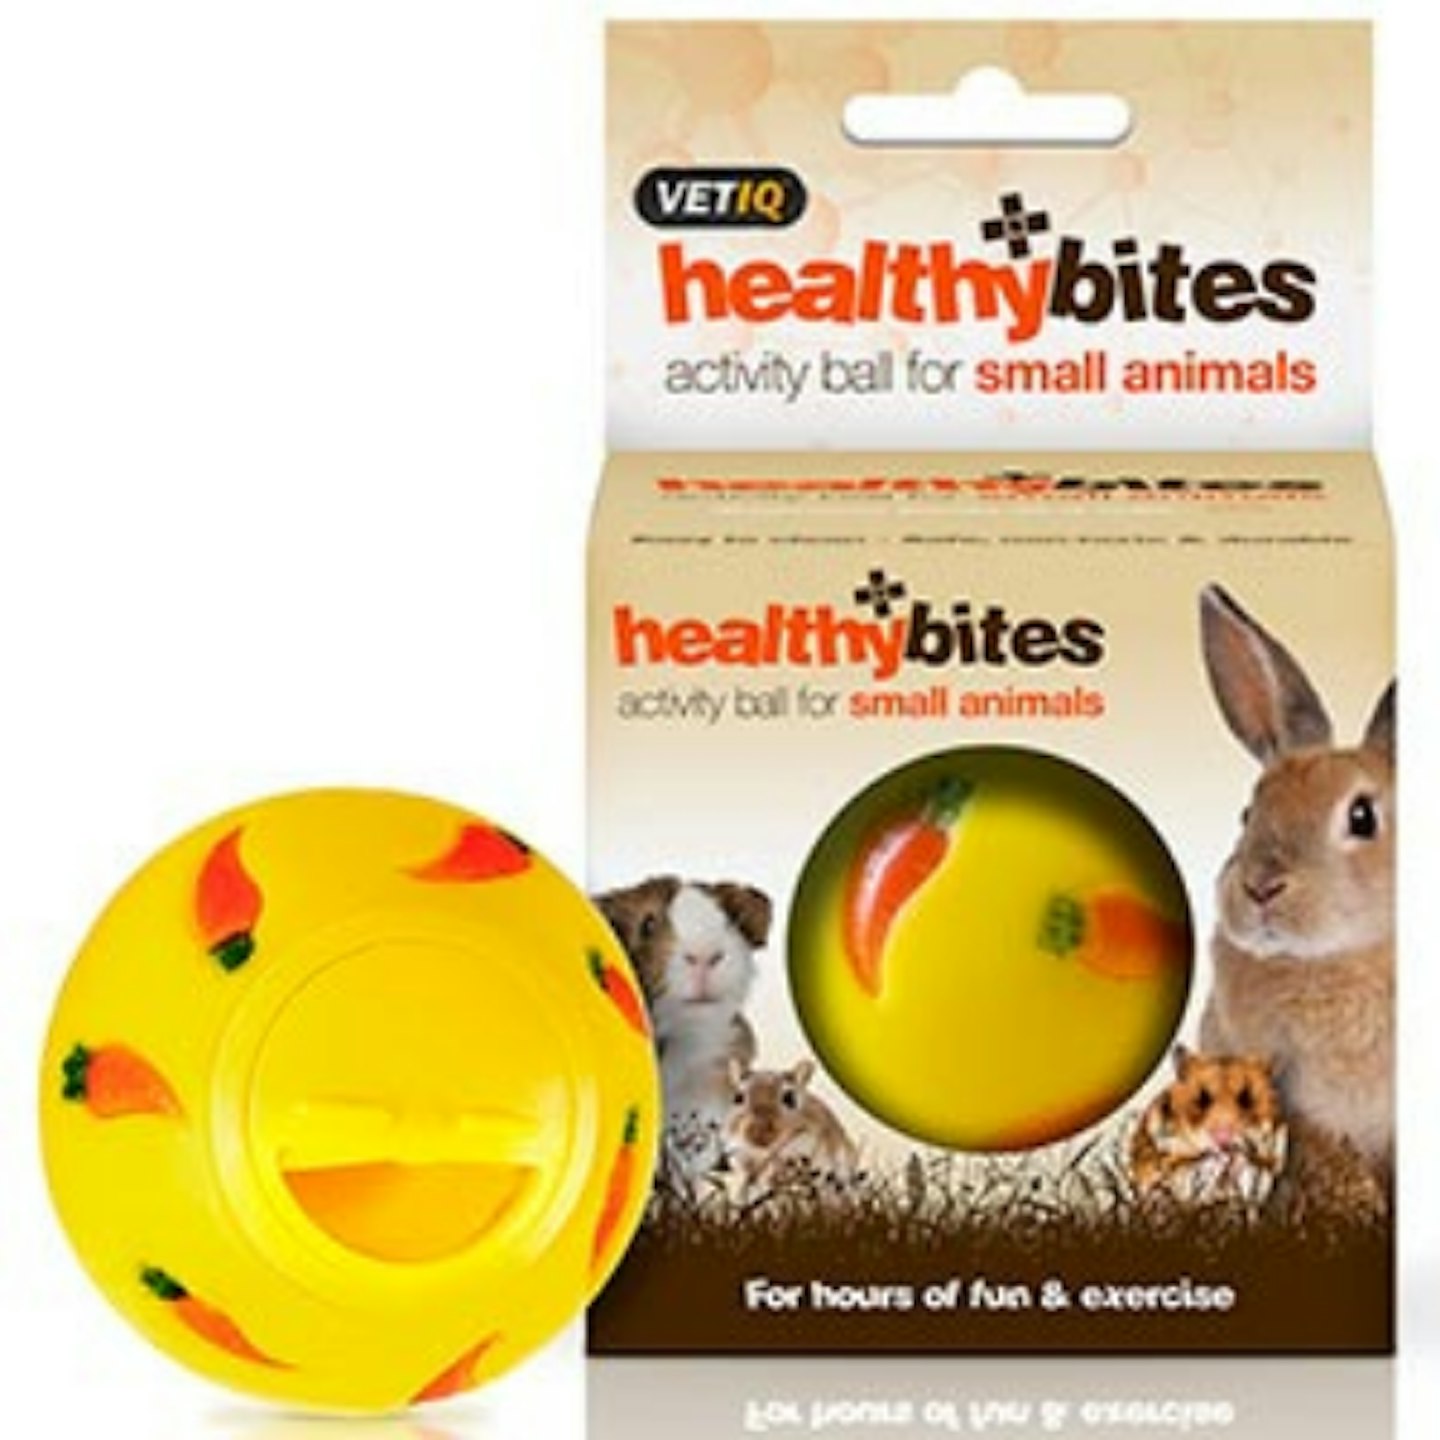 VetIQ Healthy Bites Activity Treat Ball for Small Animals Assorted